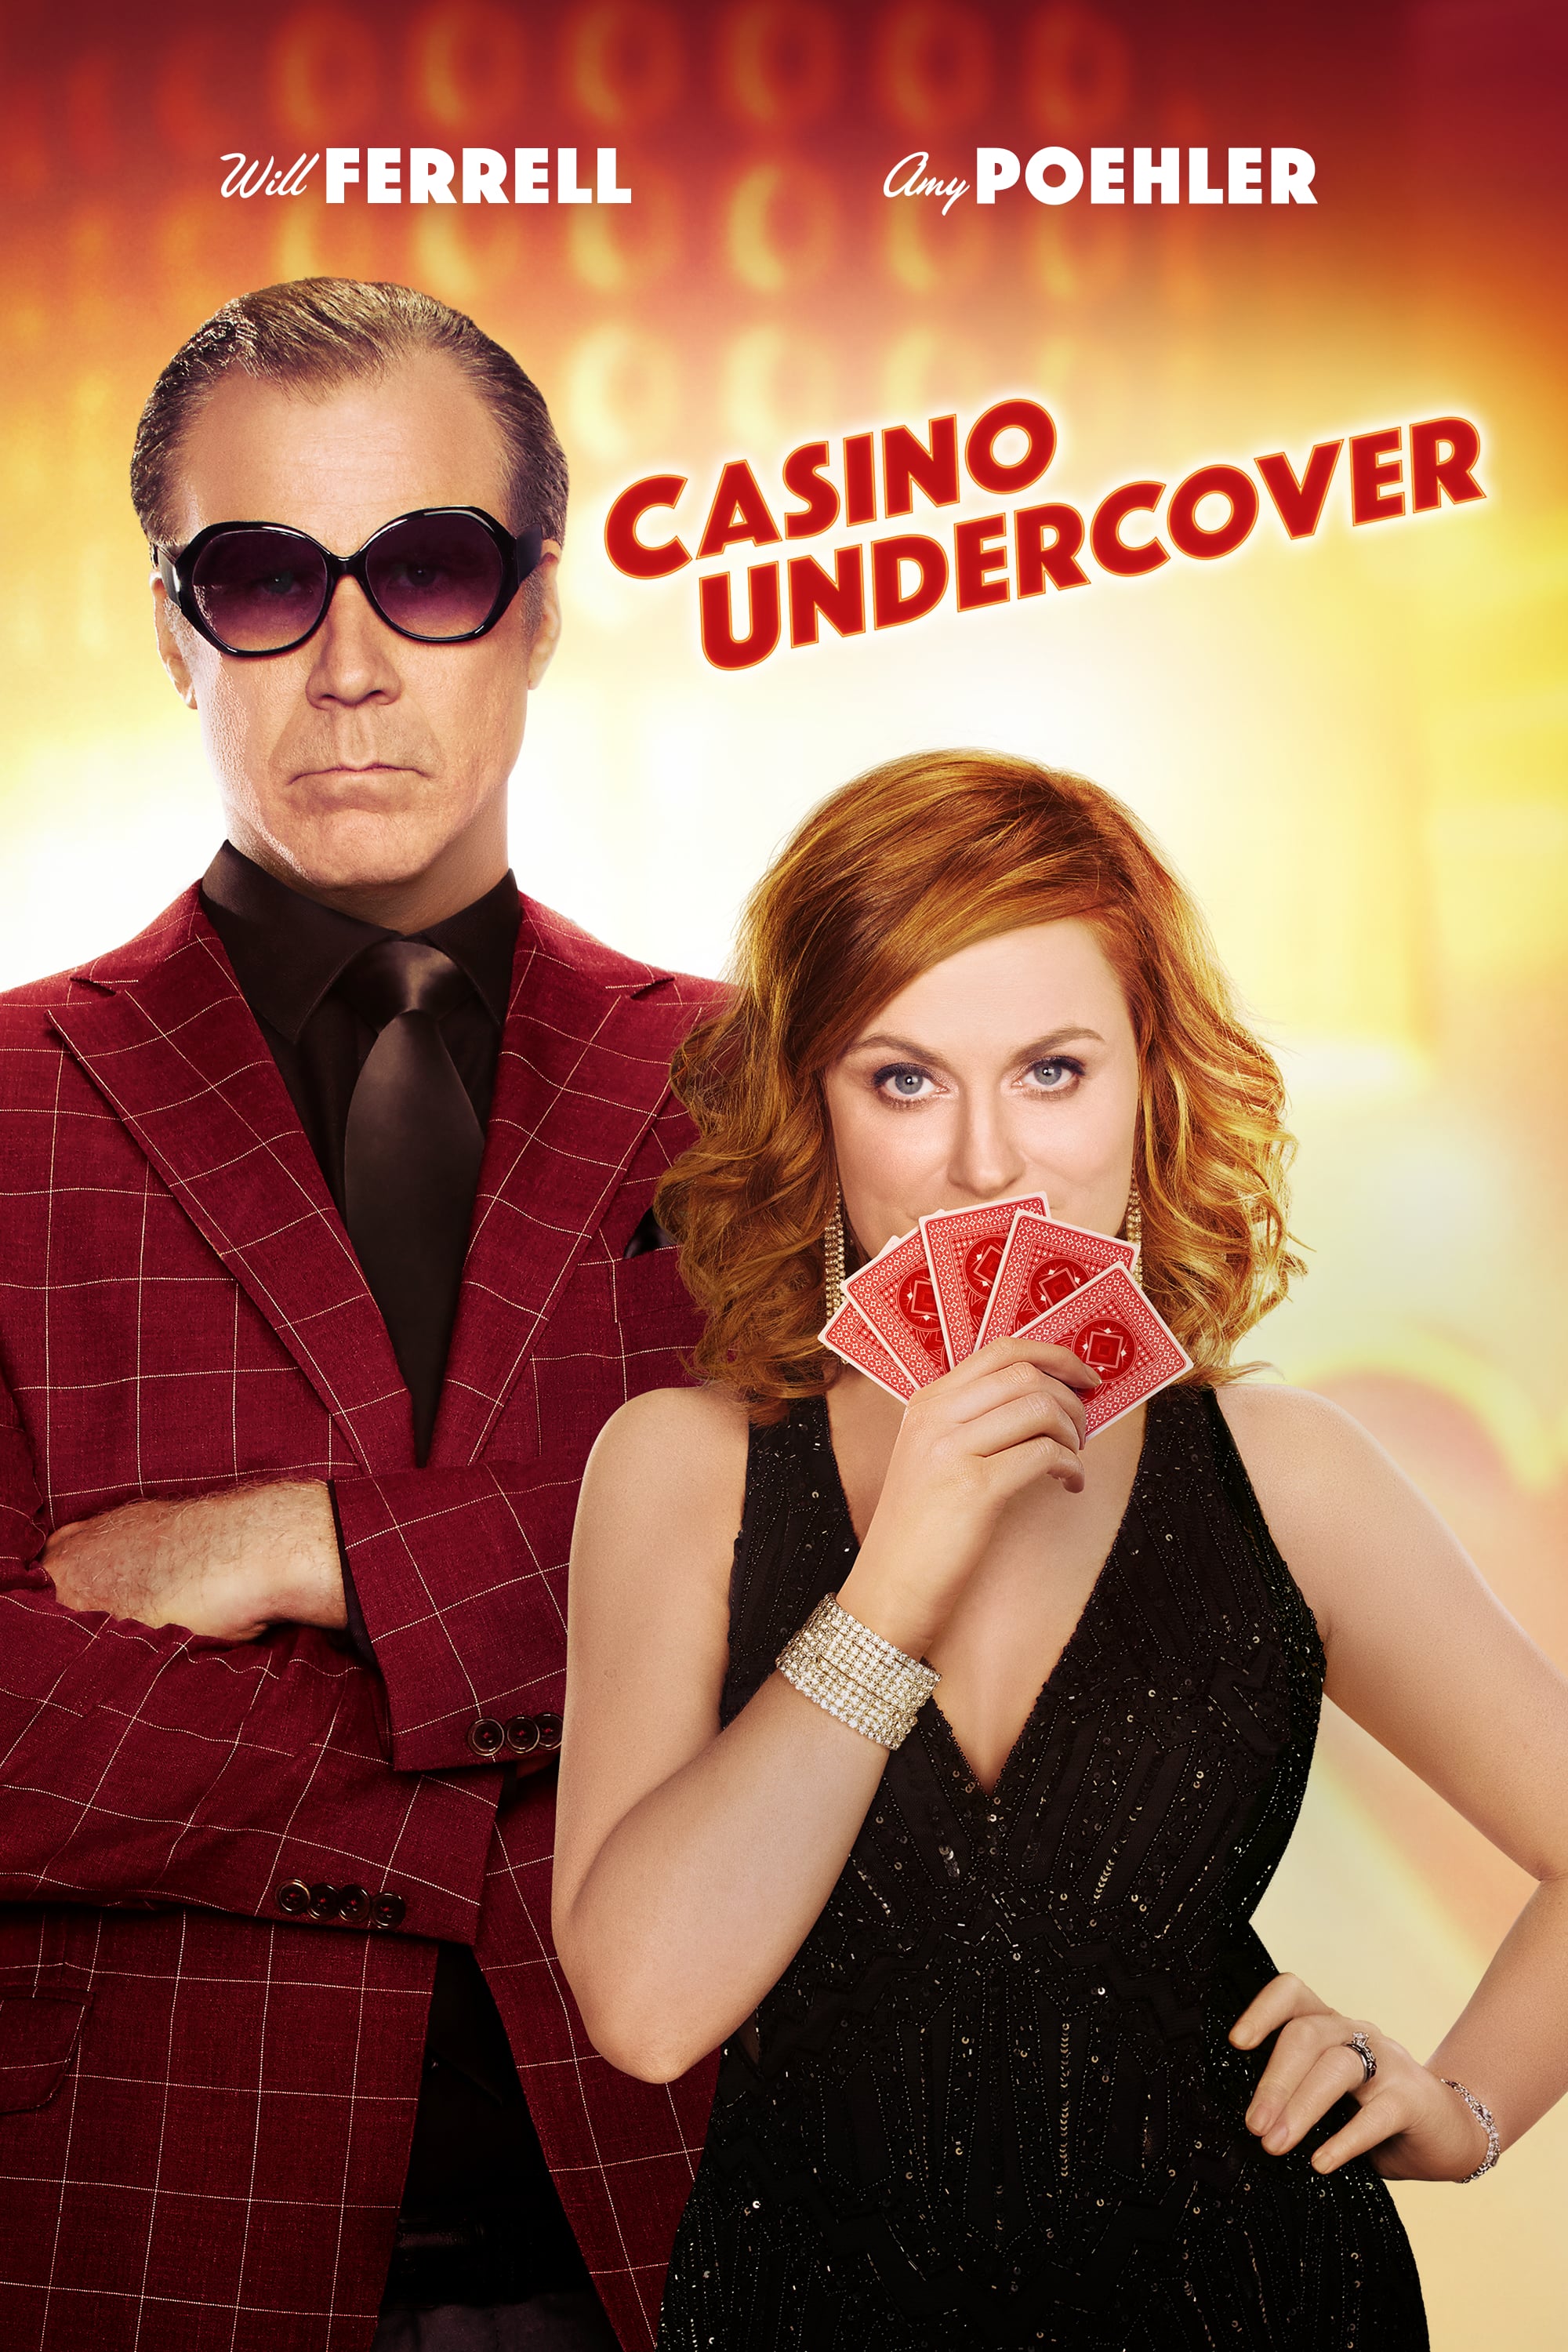 Plakat von "Casino Undercover"